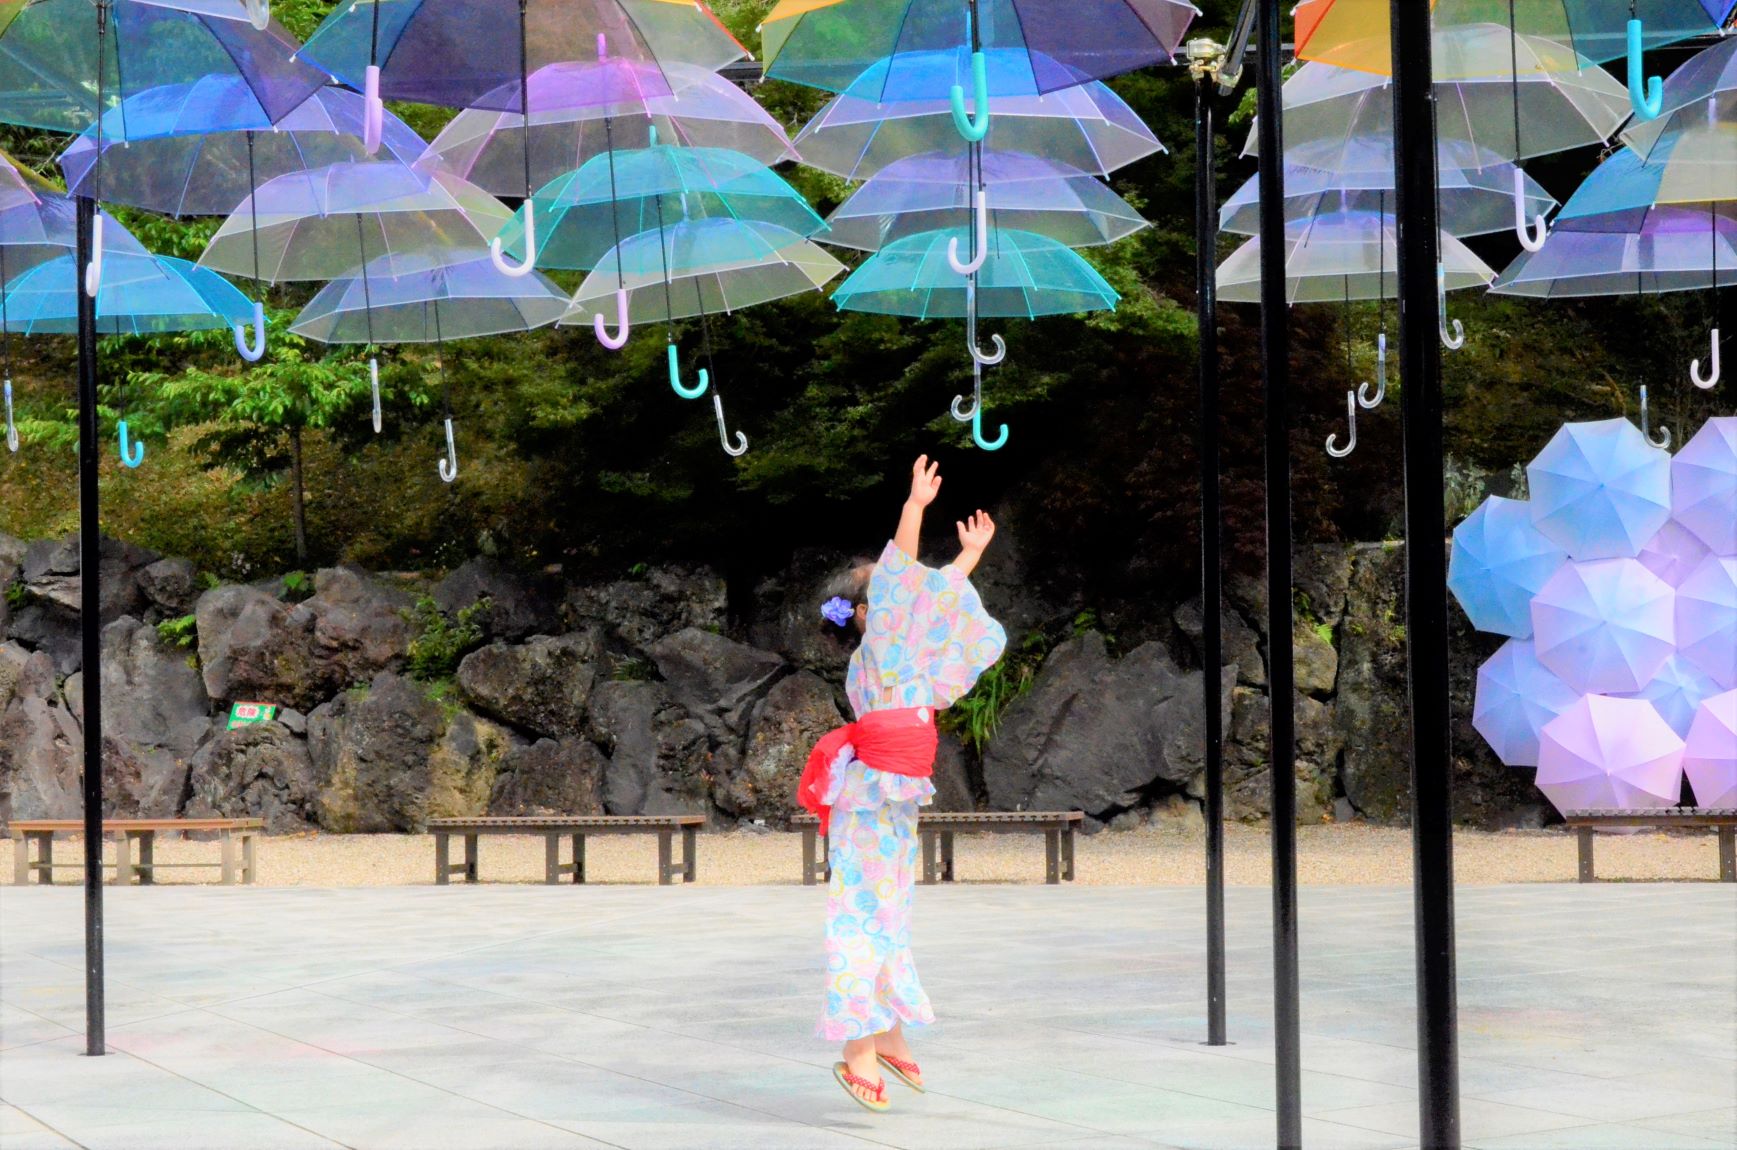 Let's jump! HATTASAN Umbrella Sky